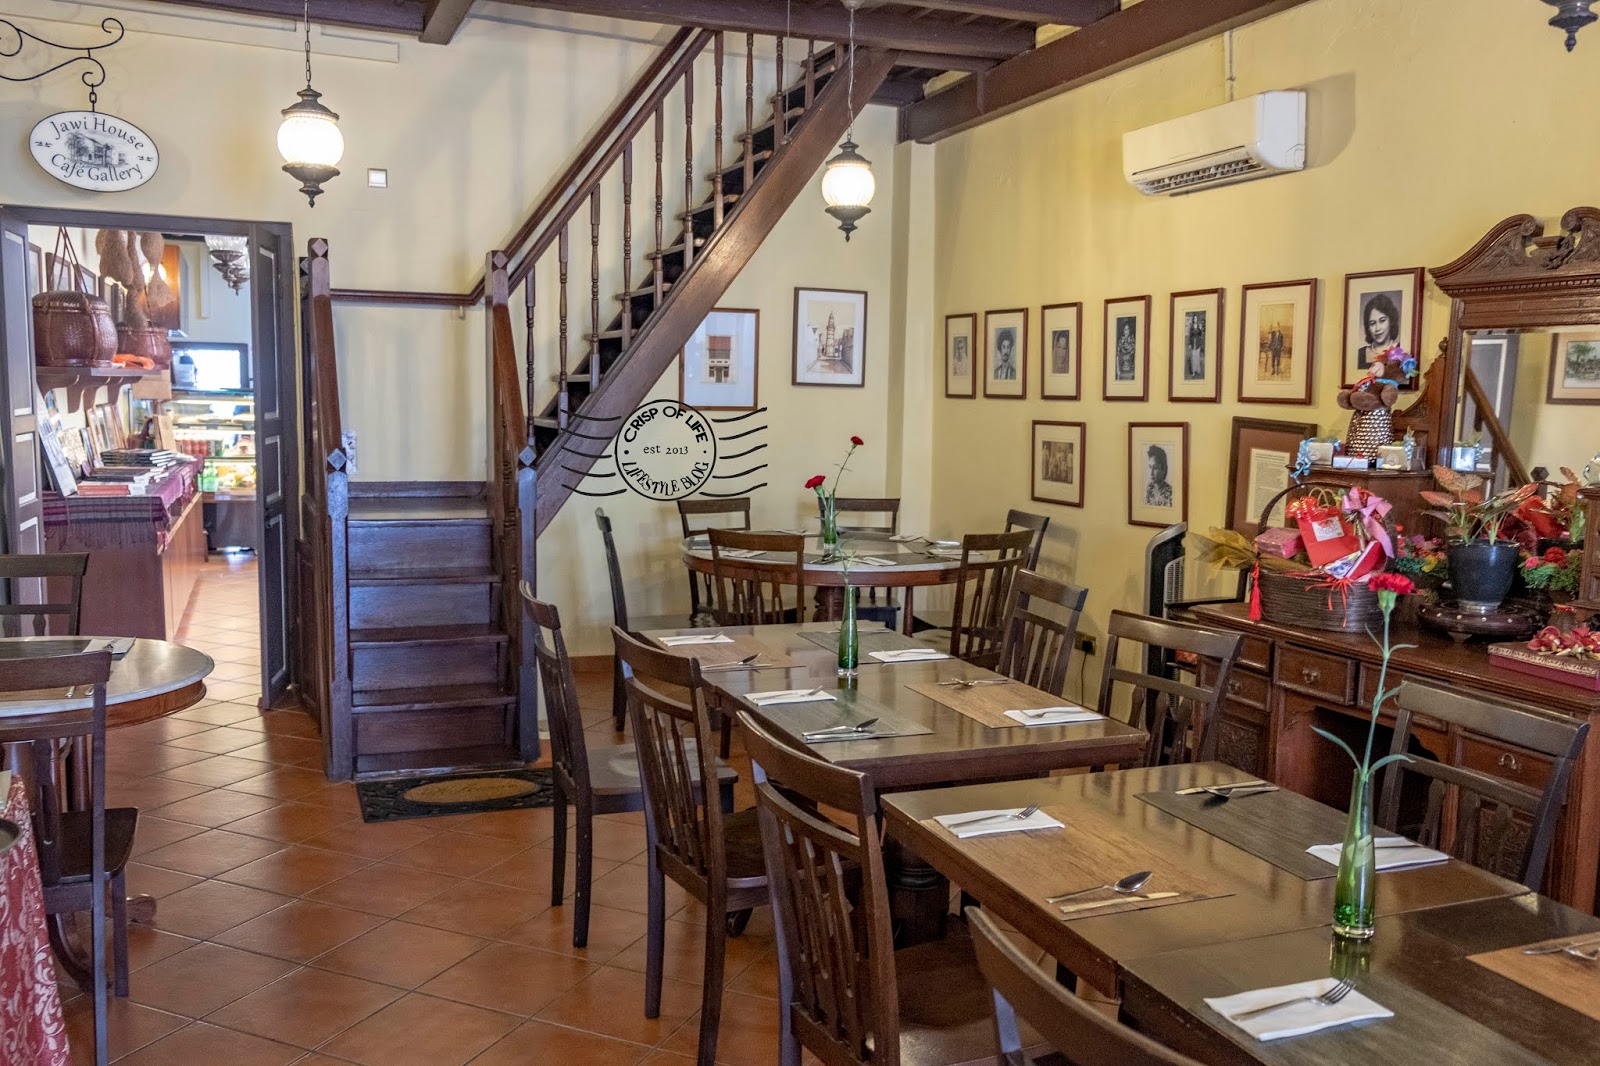 Jawi House Cafe Gallery @ Lebuh Armenian, Penang - Crisp 